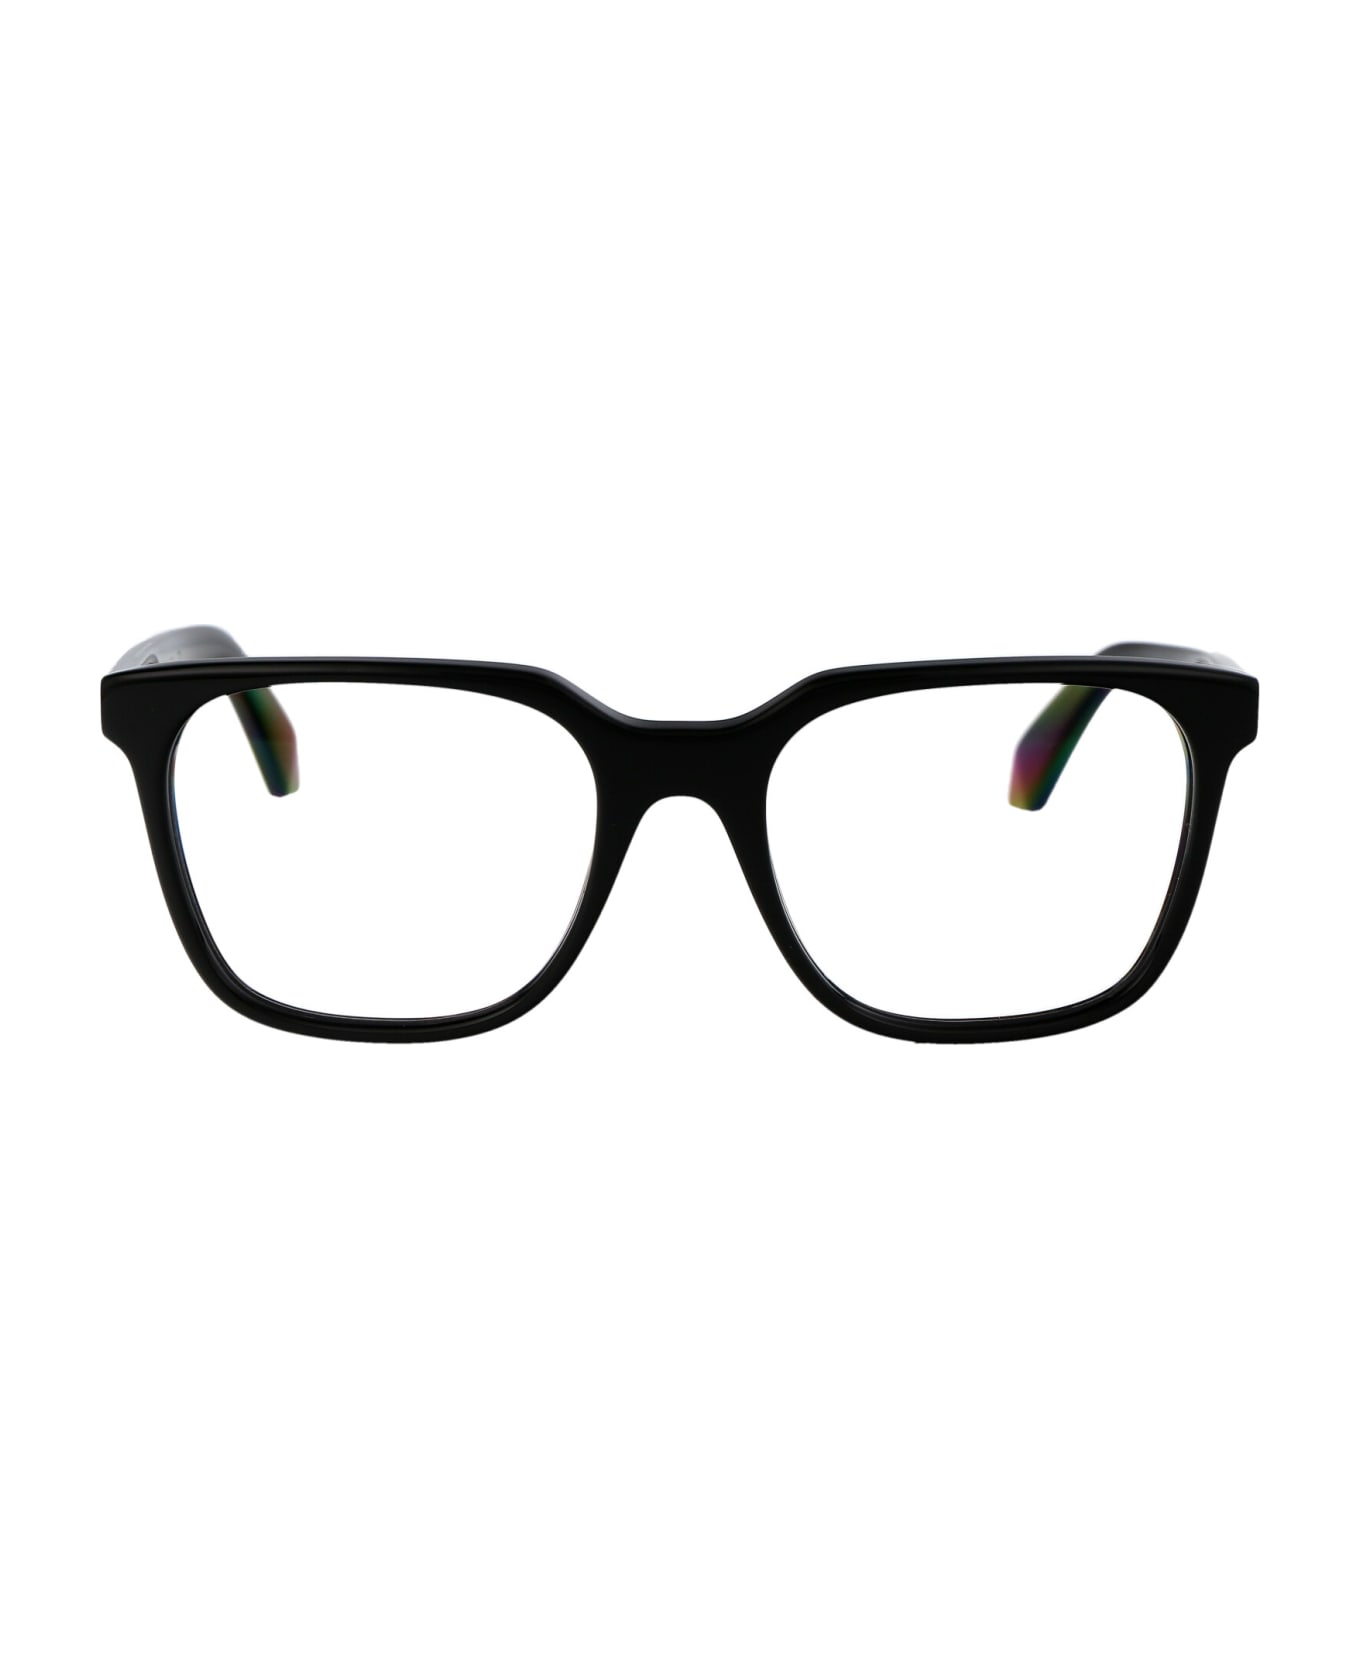 Off-White Optical Style 38 Glasses - 1000 BLACK